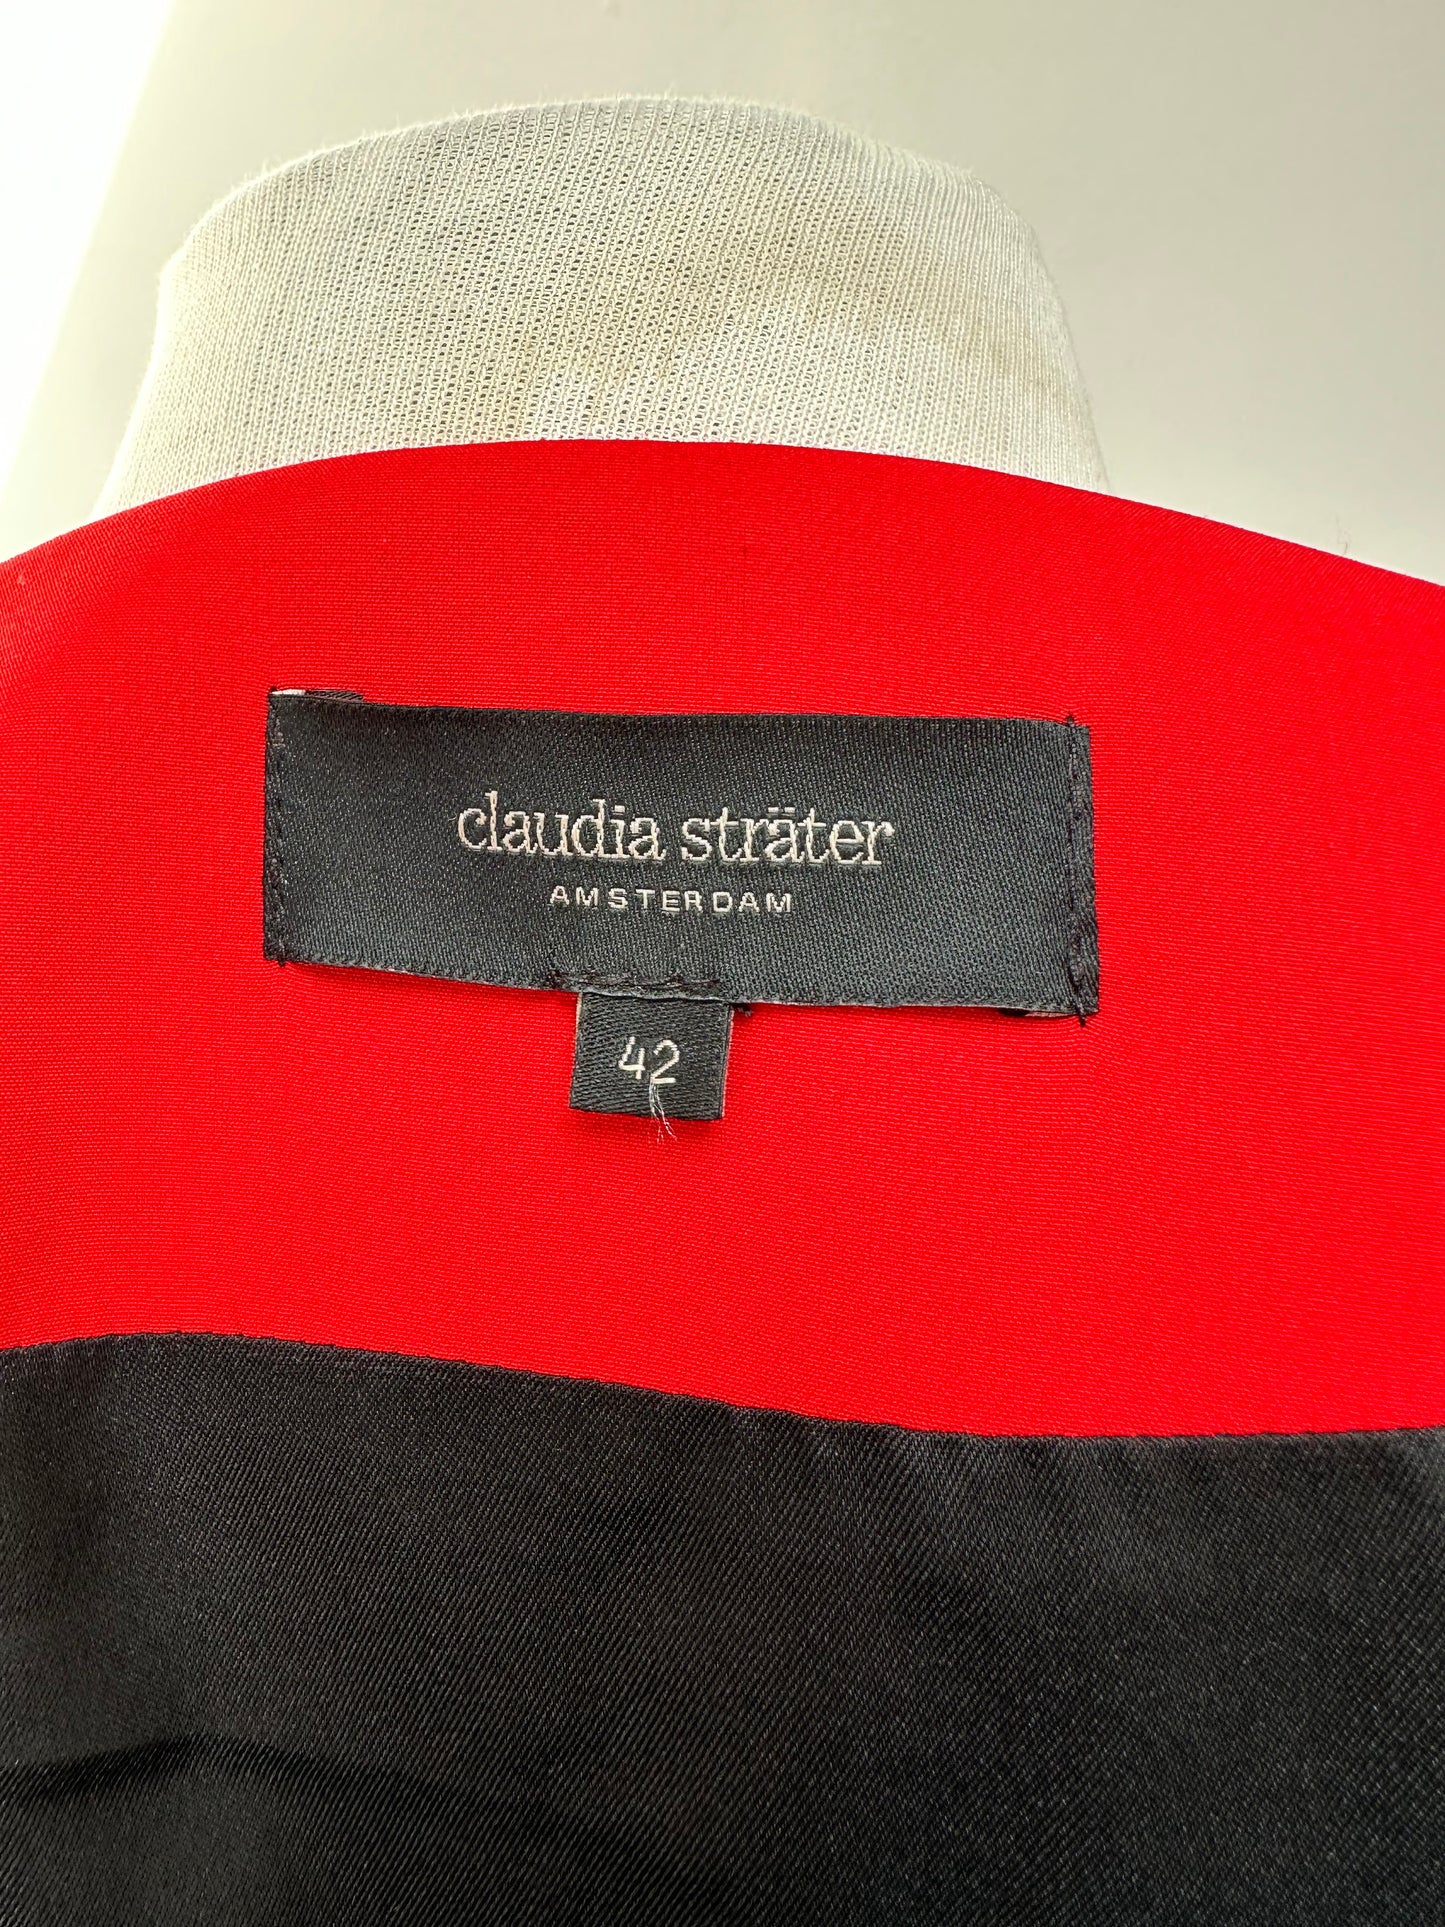 Claudia Sträter rood jasje maat 42